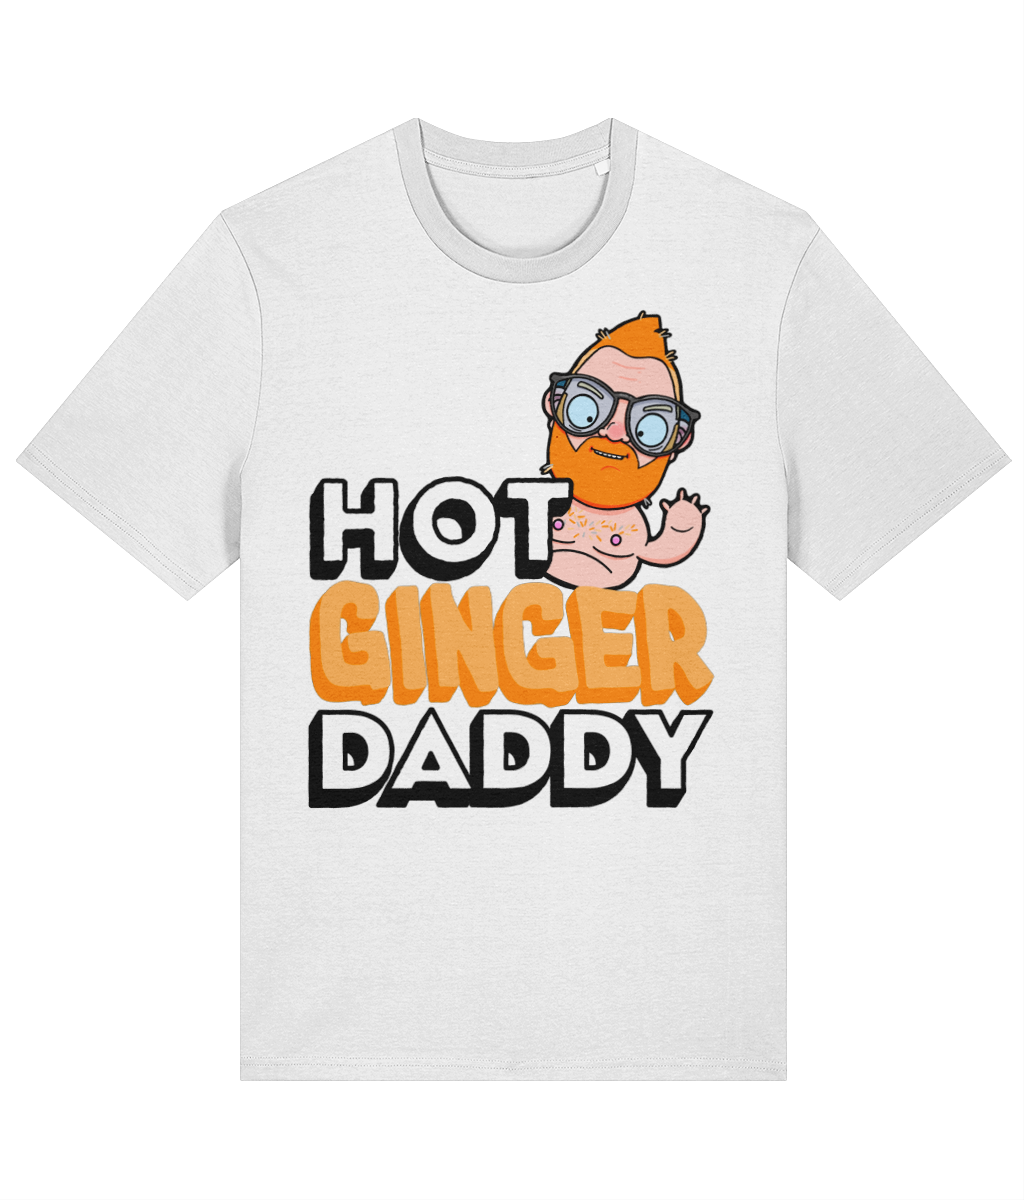 Hot Ginger Daddy T-Shirt